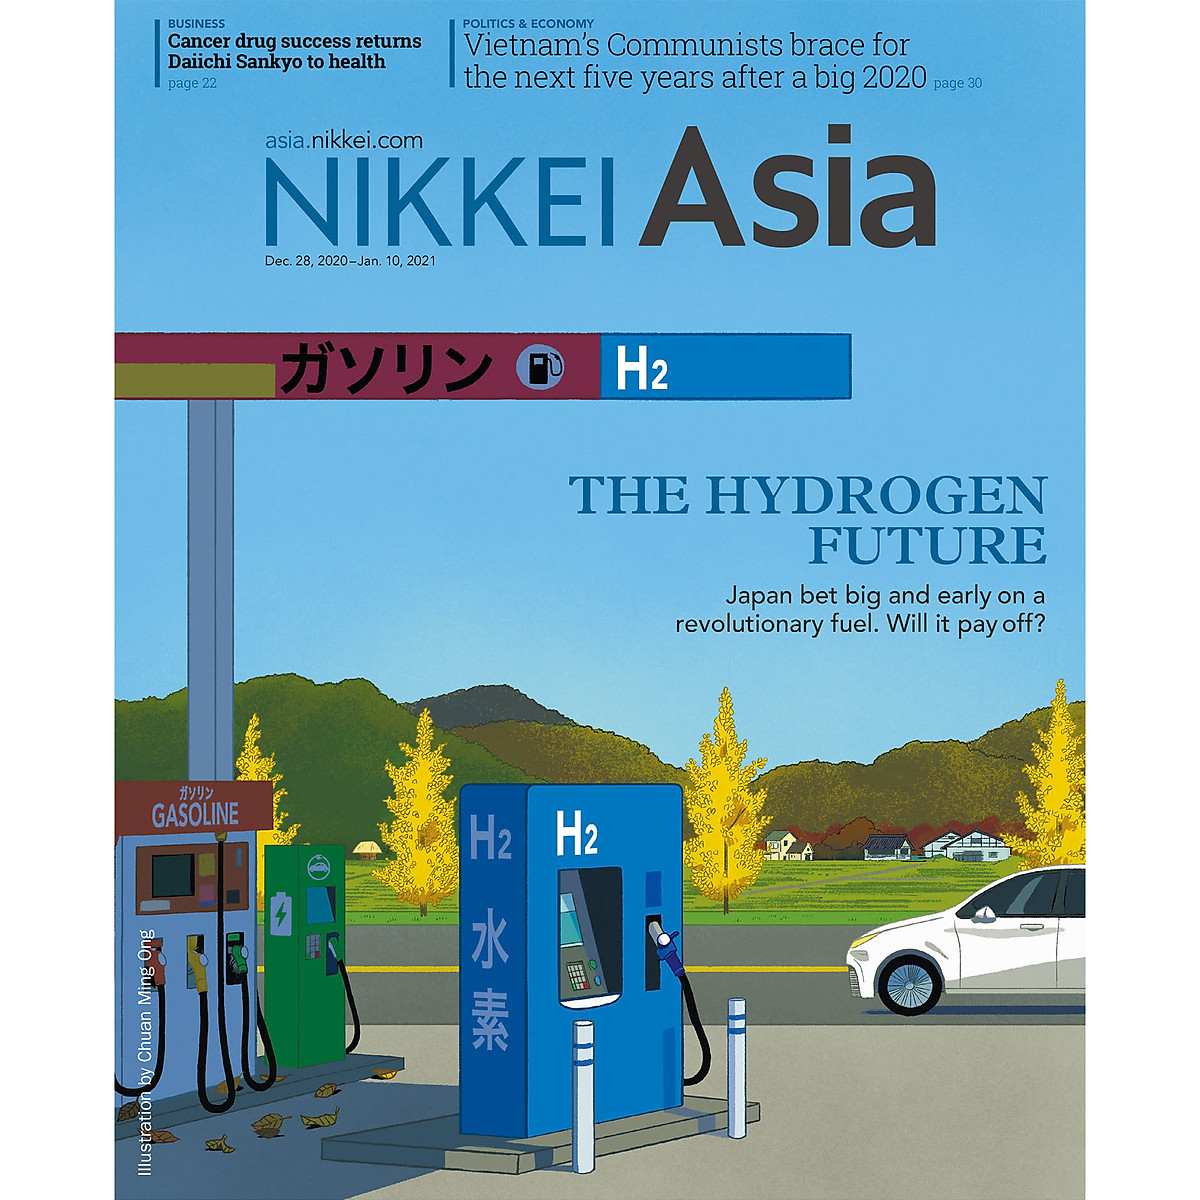 Nikkei Asian Review: Nikkei Asia - THE HYDROGEN FUTURE - 51.20, tạp chí kinh tế nước ngoài, nhập khẩu từ Singapore